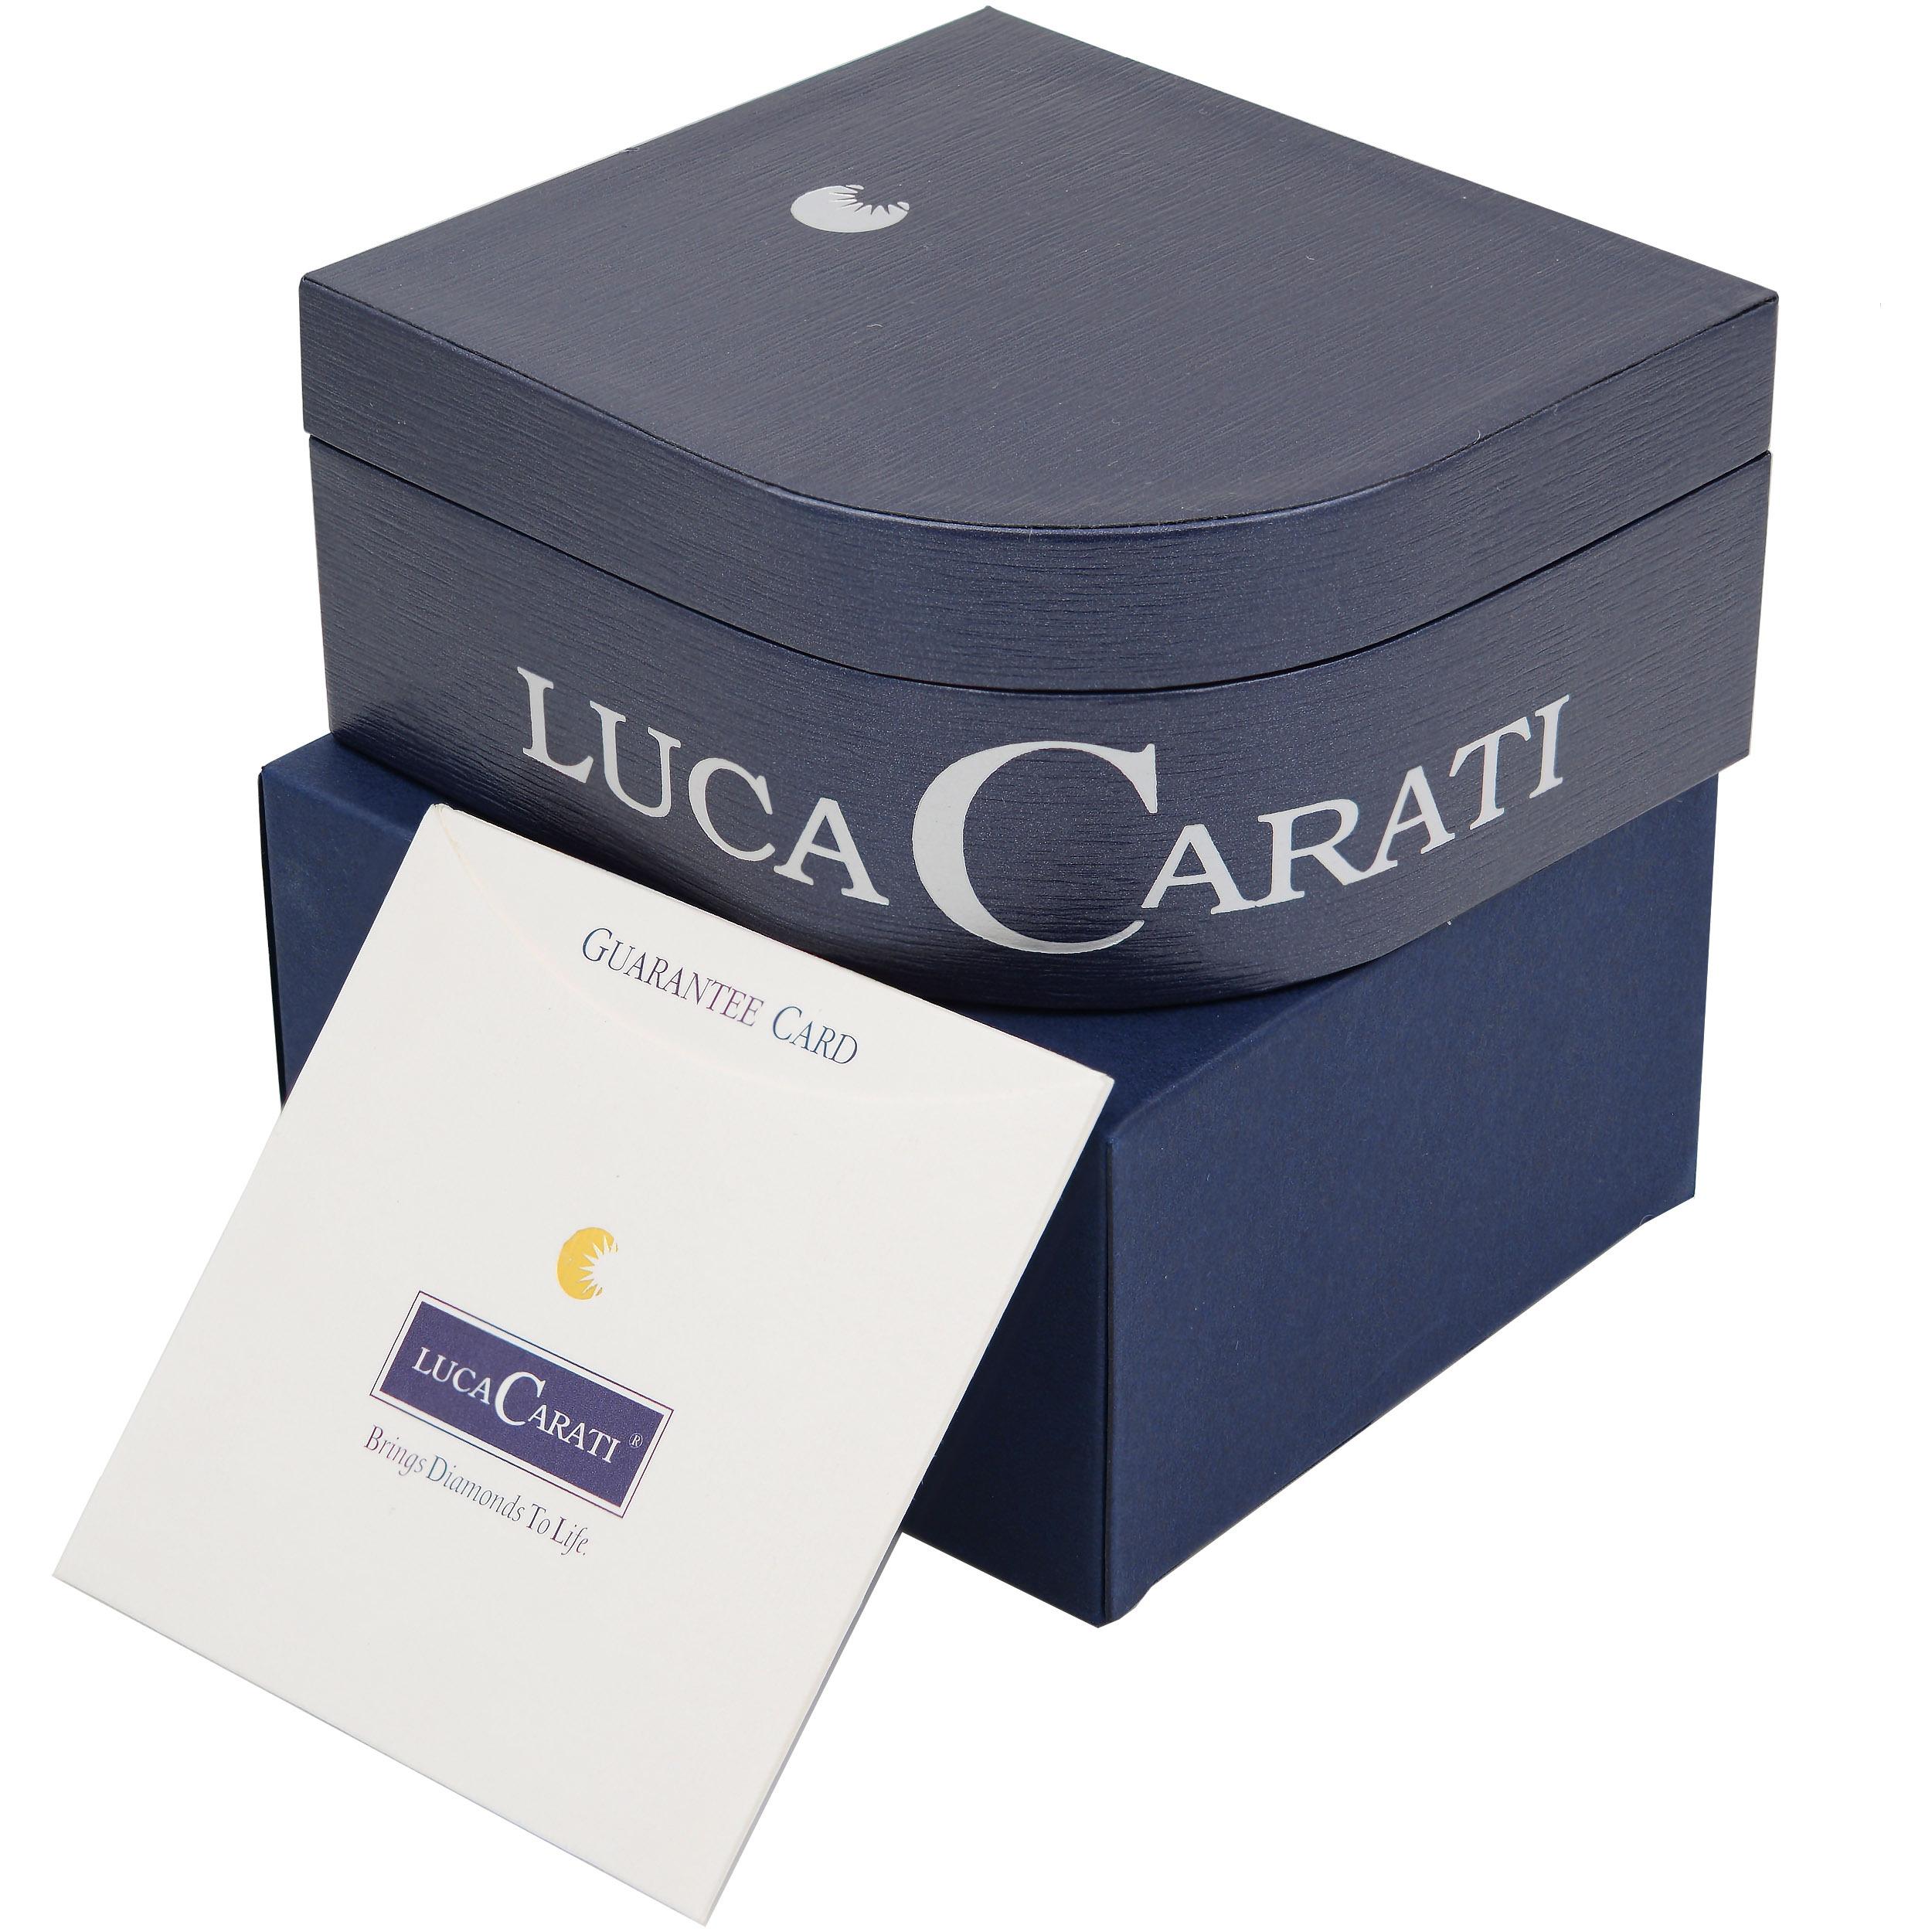 Brilliant Cut Luca Carati 18K Rose Gold Red Agate Diamond Pendant Necklace 0.30Cttw For Sale